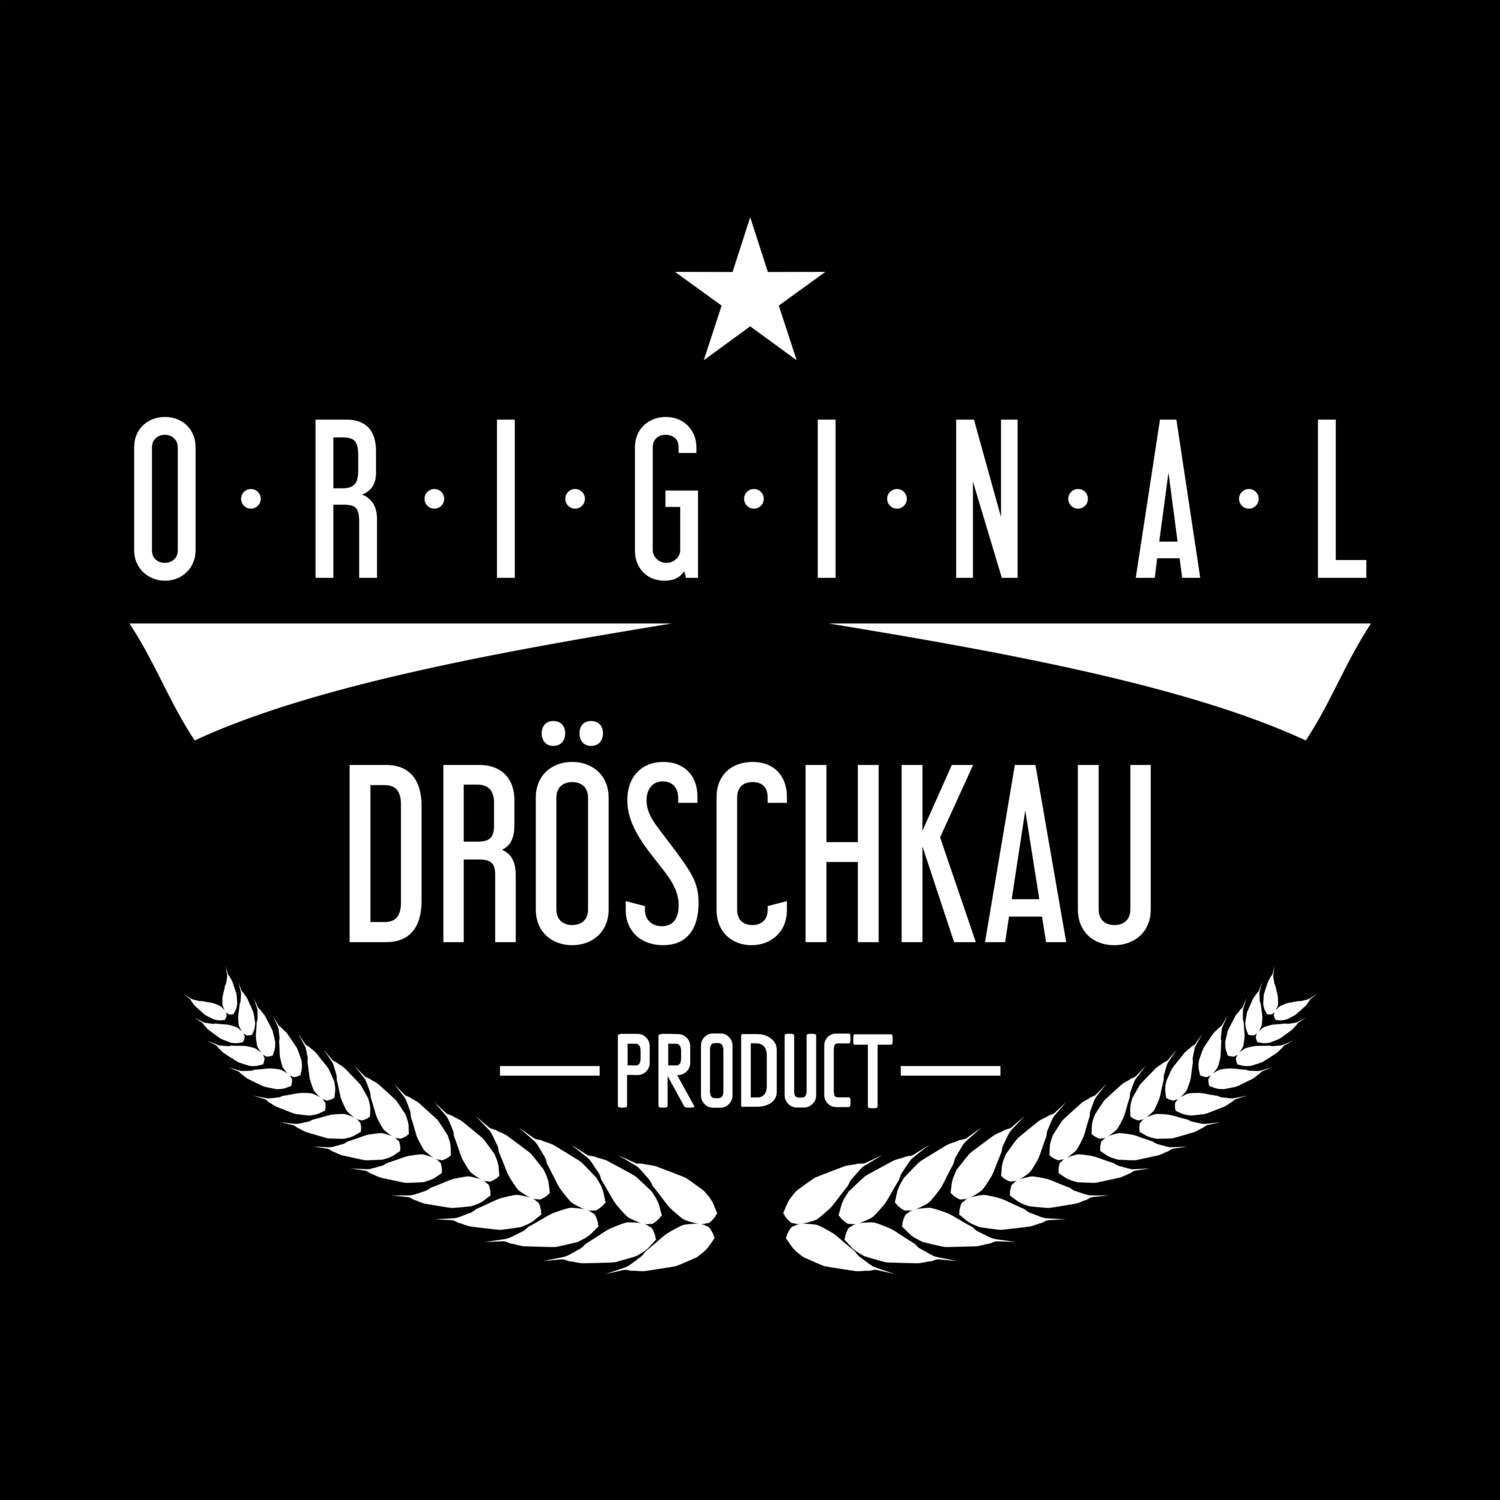 Dröschkau T-Shirt »Original Product«